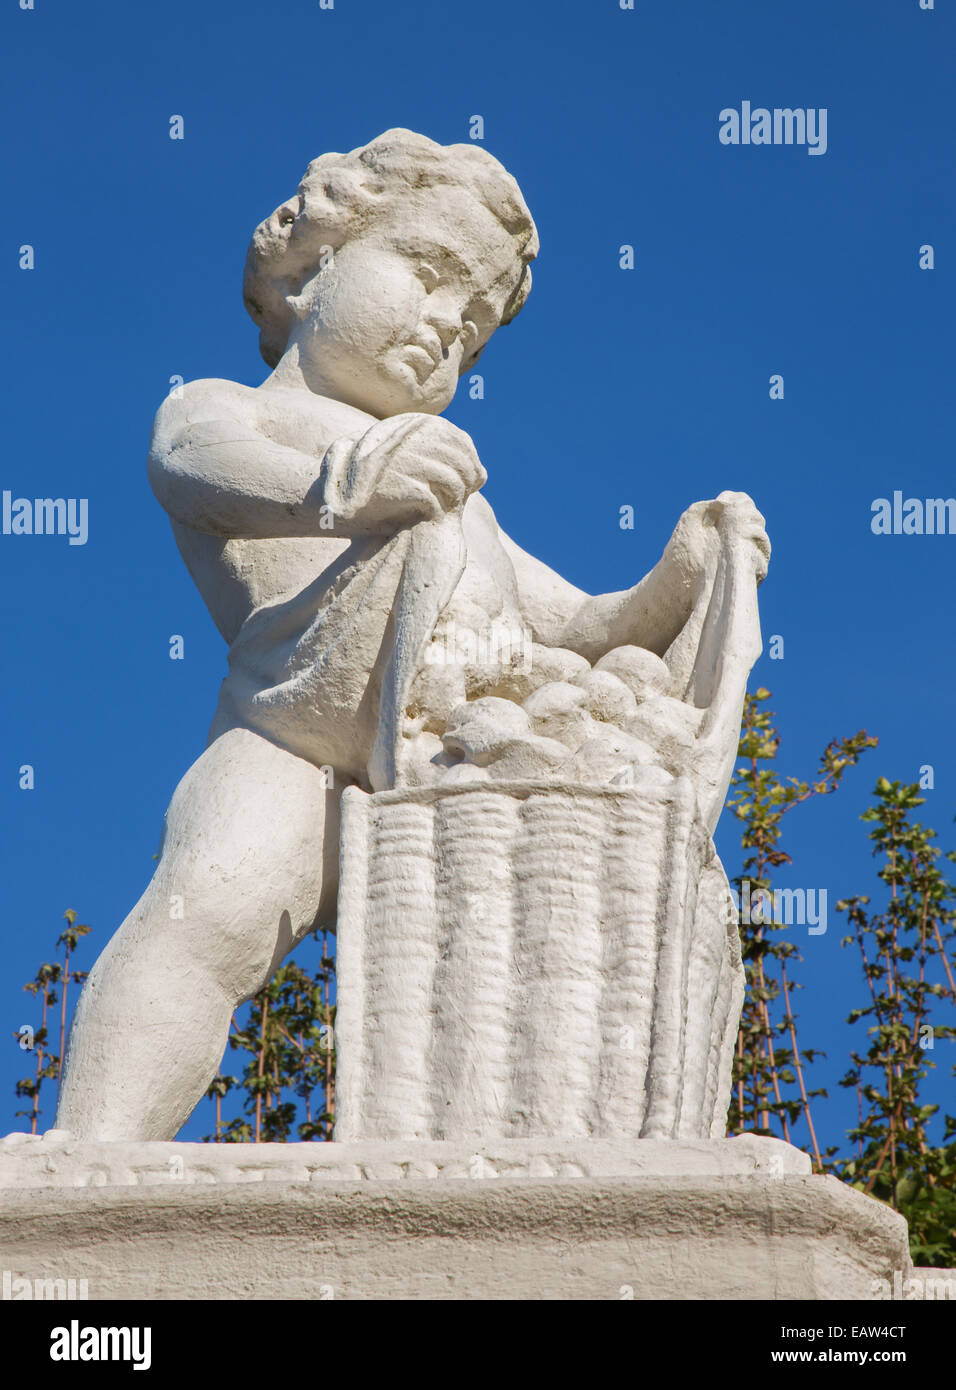 Wien - die symbolische Skulptur des Monats September in den Gärten des Schlosses Belvedere. Stockfoto